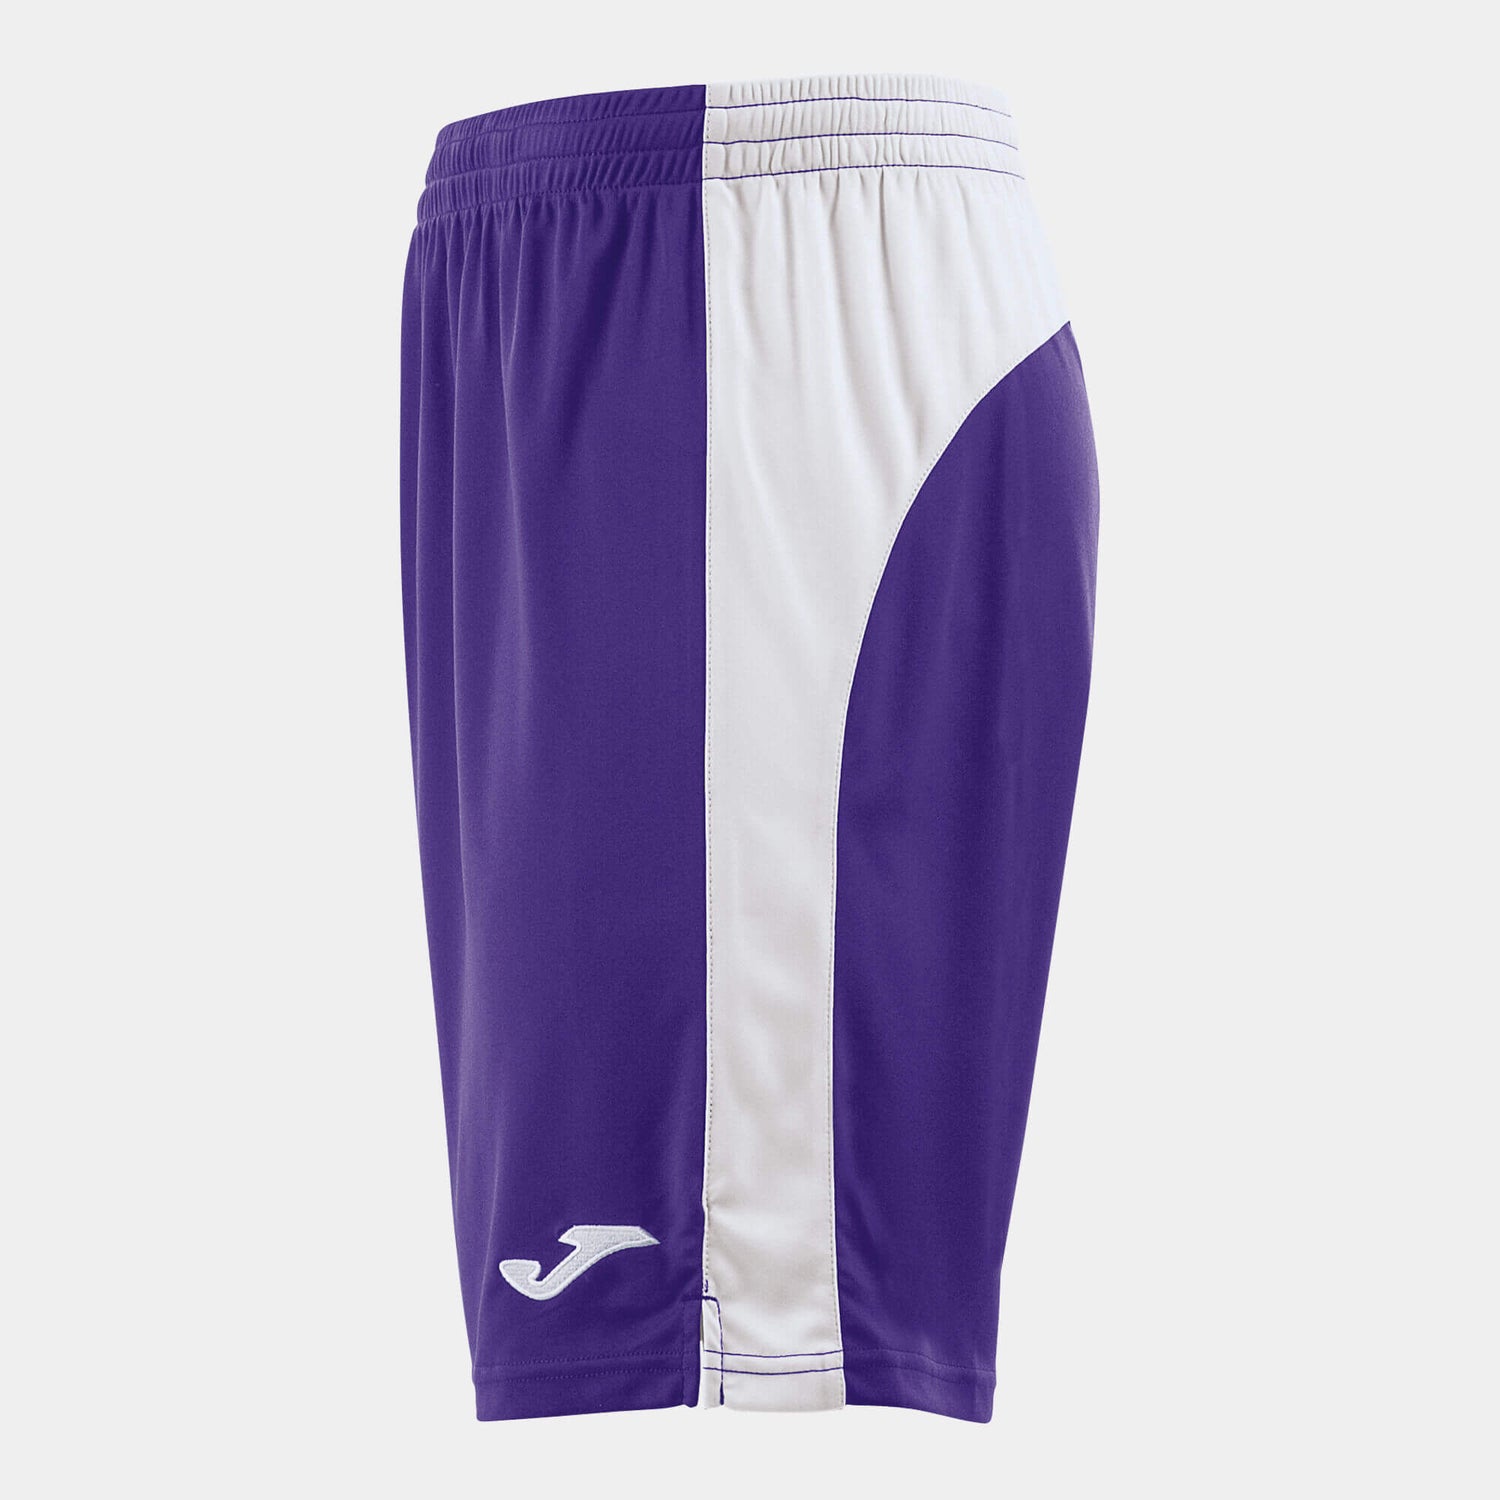 Joma Tokio II Men's Shorts  Purple-White (Side)